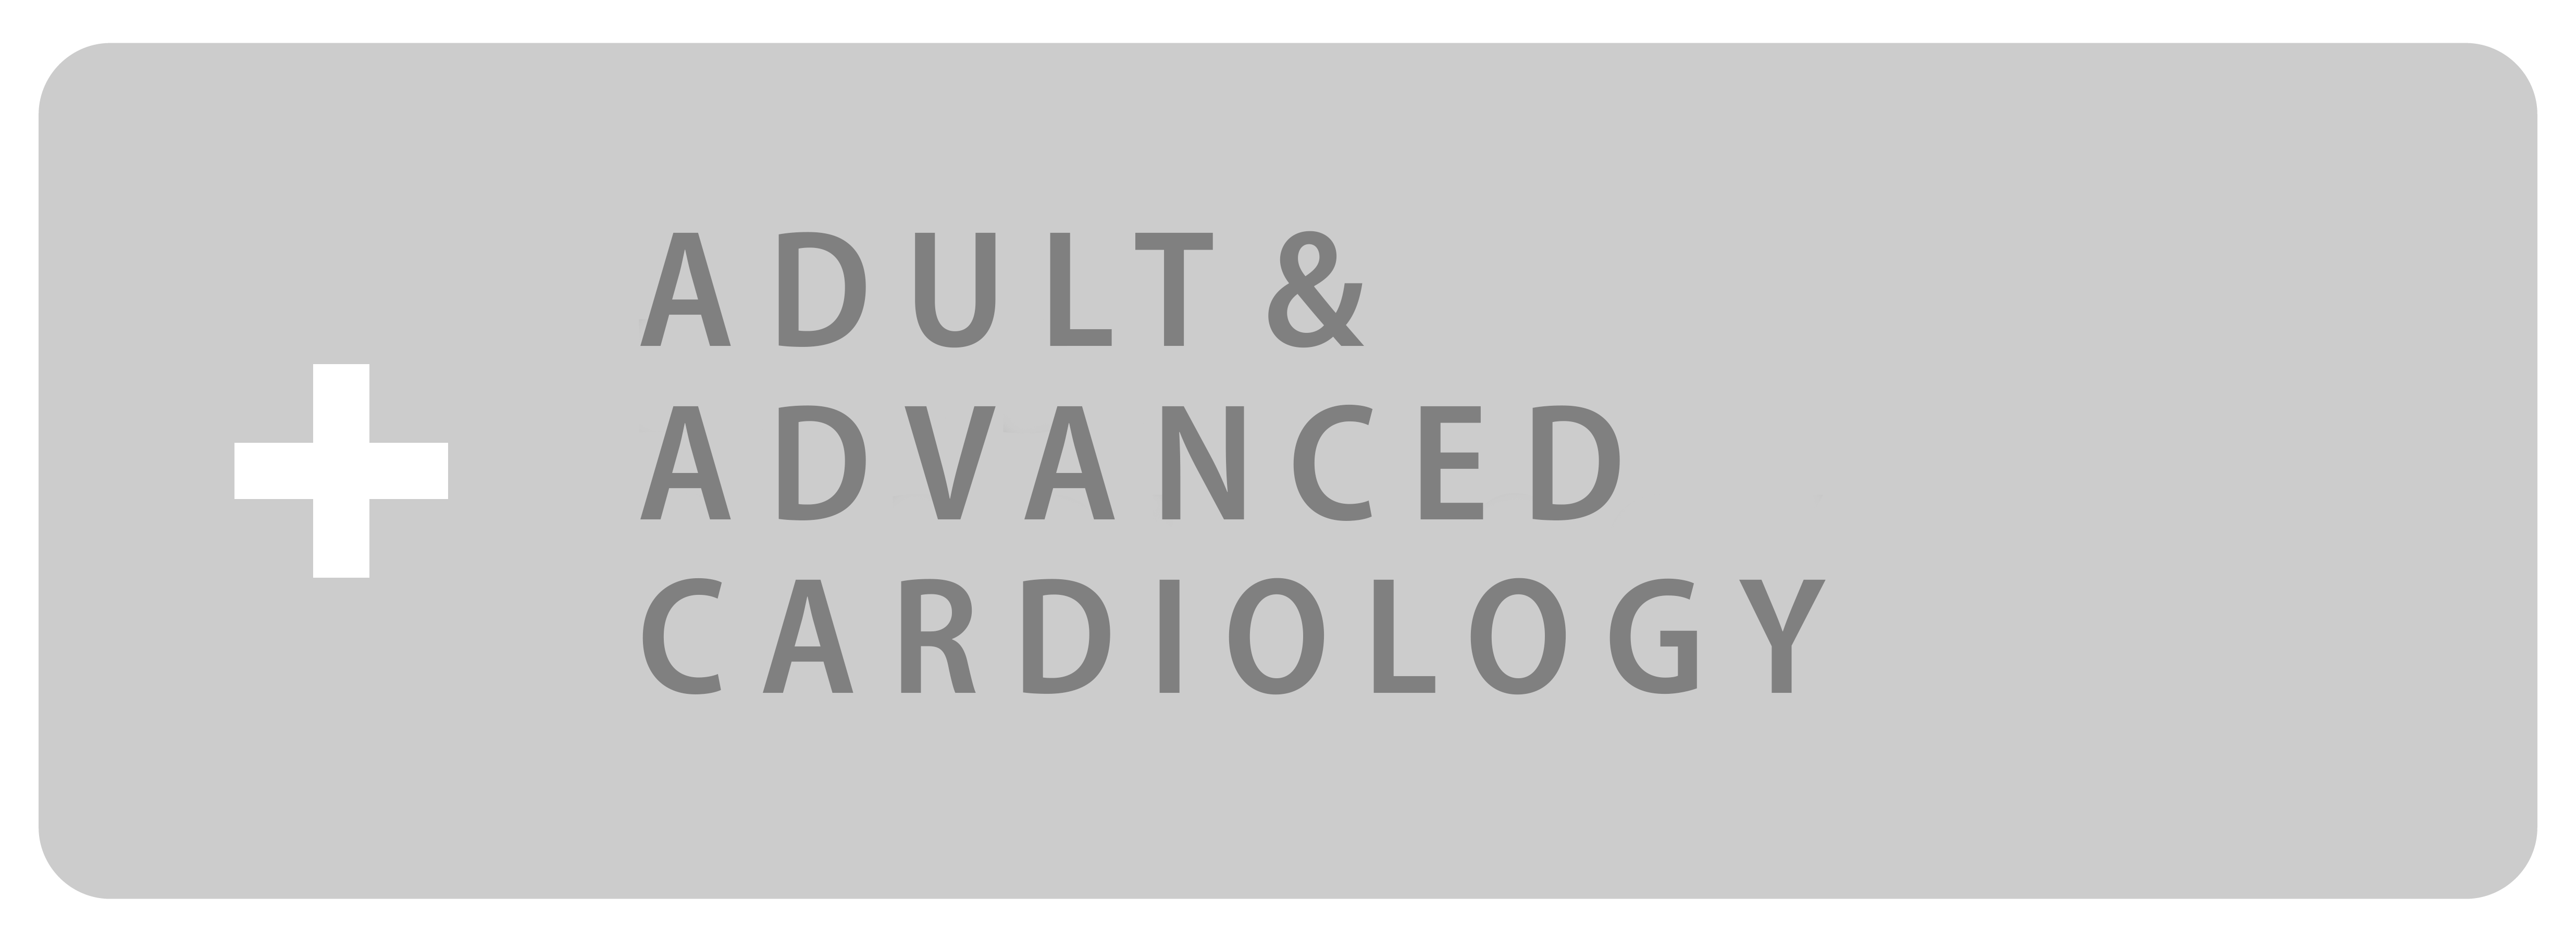 Adult & Advanced Cardiology